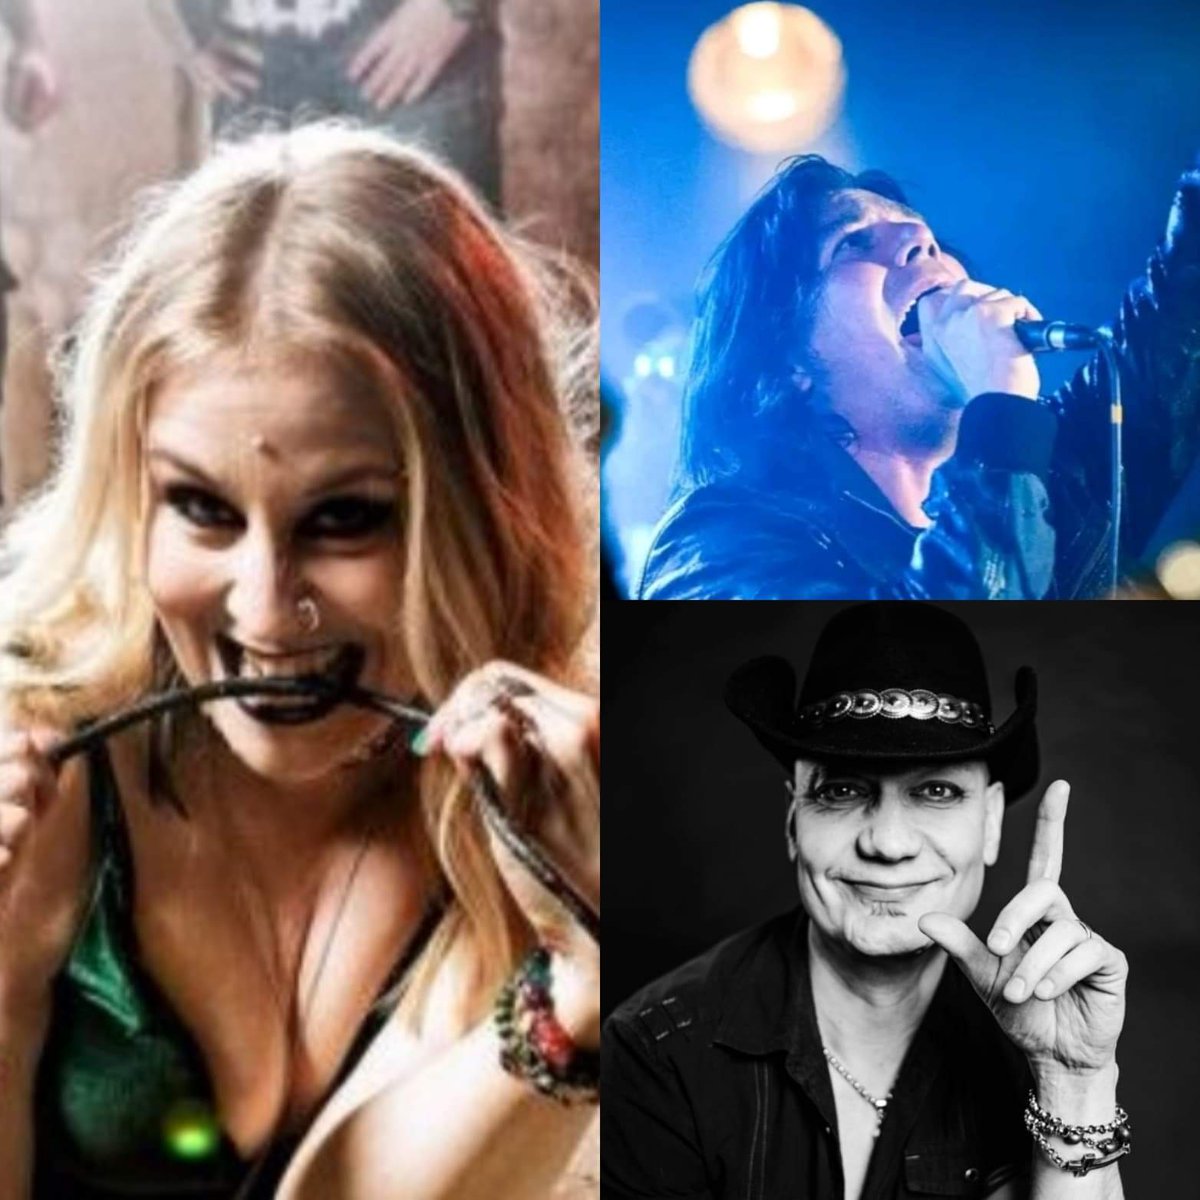 Metal Shock Finland reports: metalshockfinland.com Next show: 31.8 Lepakkomies, Helsinki #rockband #Rock #HardRock @ShowLiz1 @AnnesRockShow